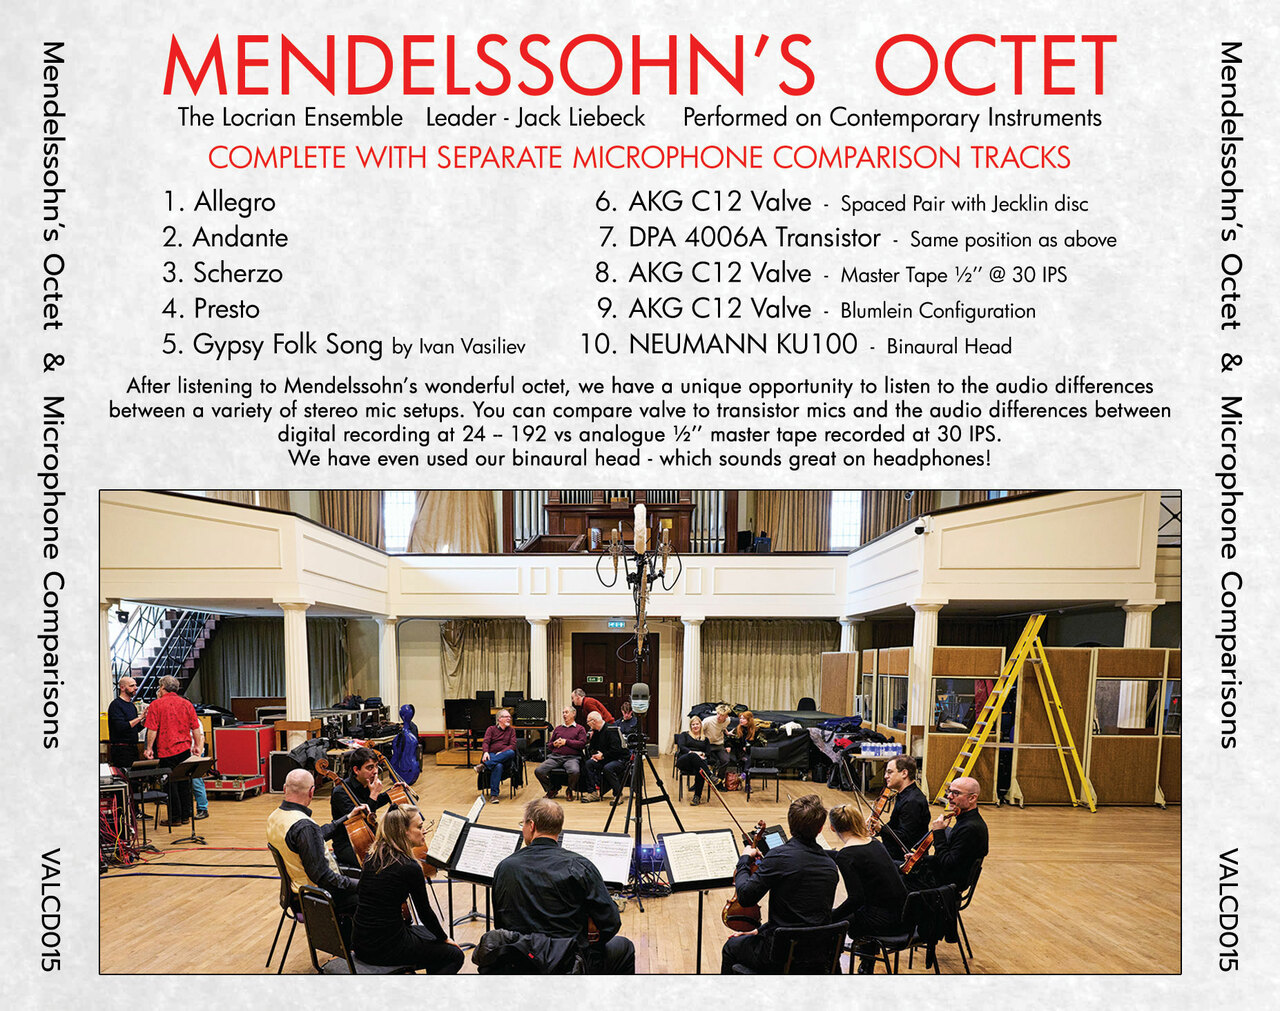 The Locrian Ensemble 멘델스존: 팔중주 (Mendelssohn's Octet)